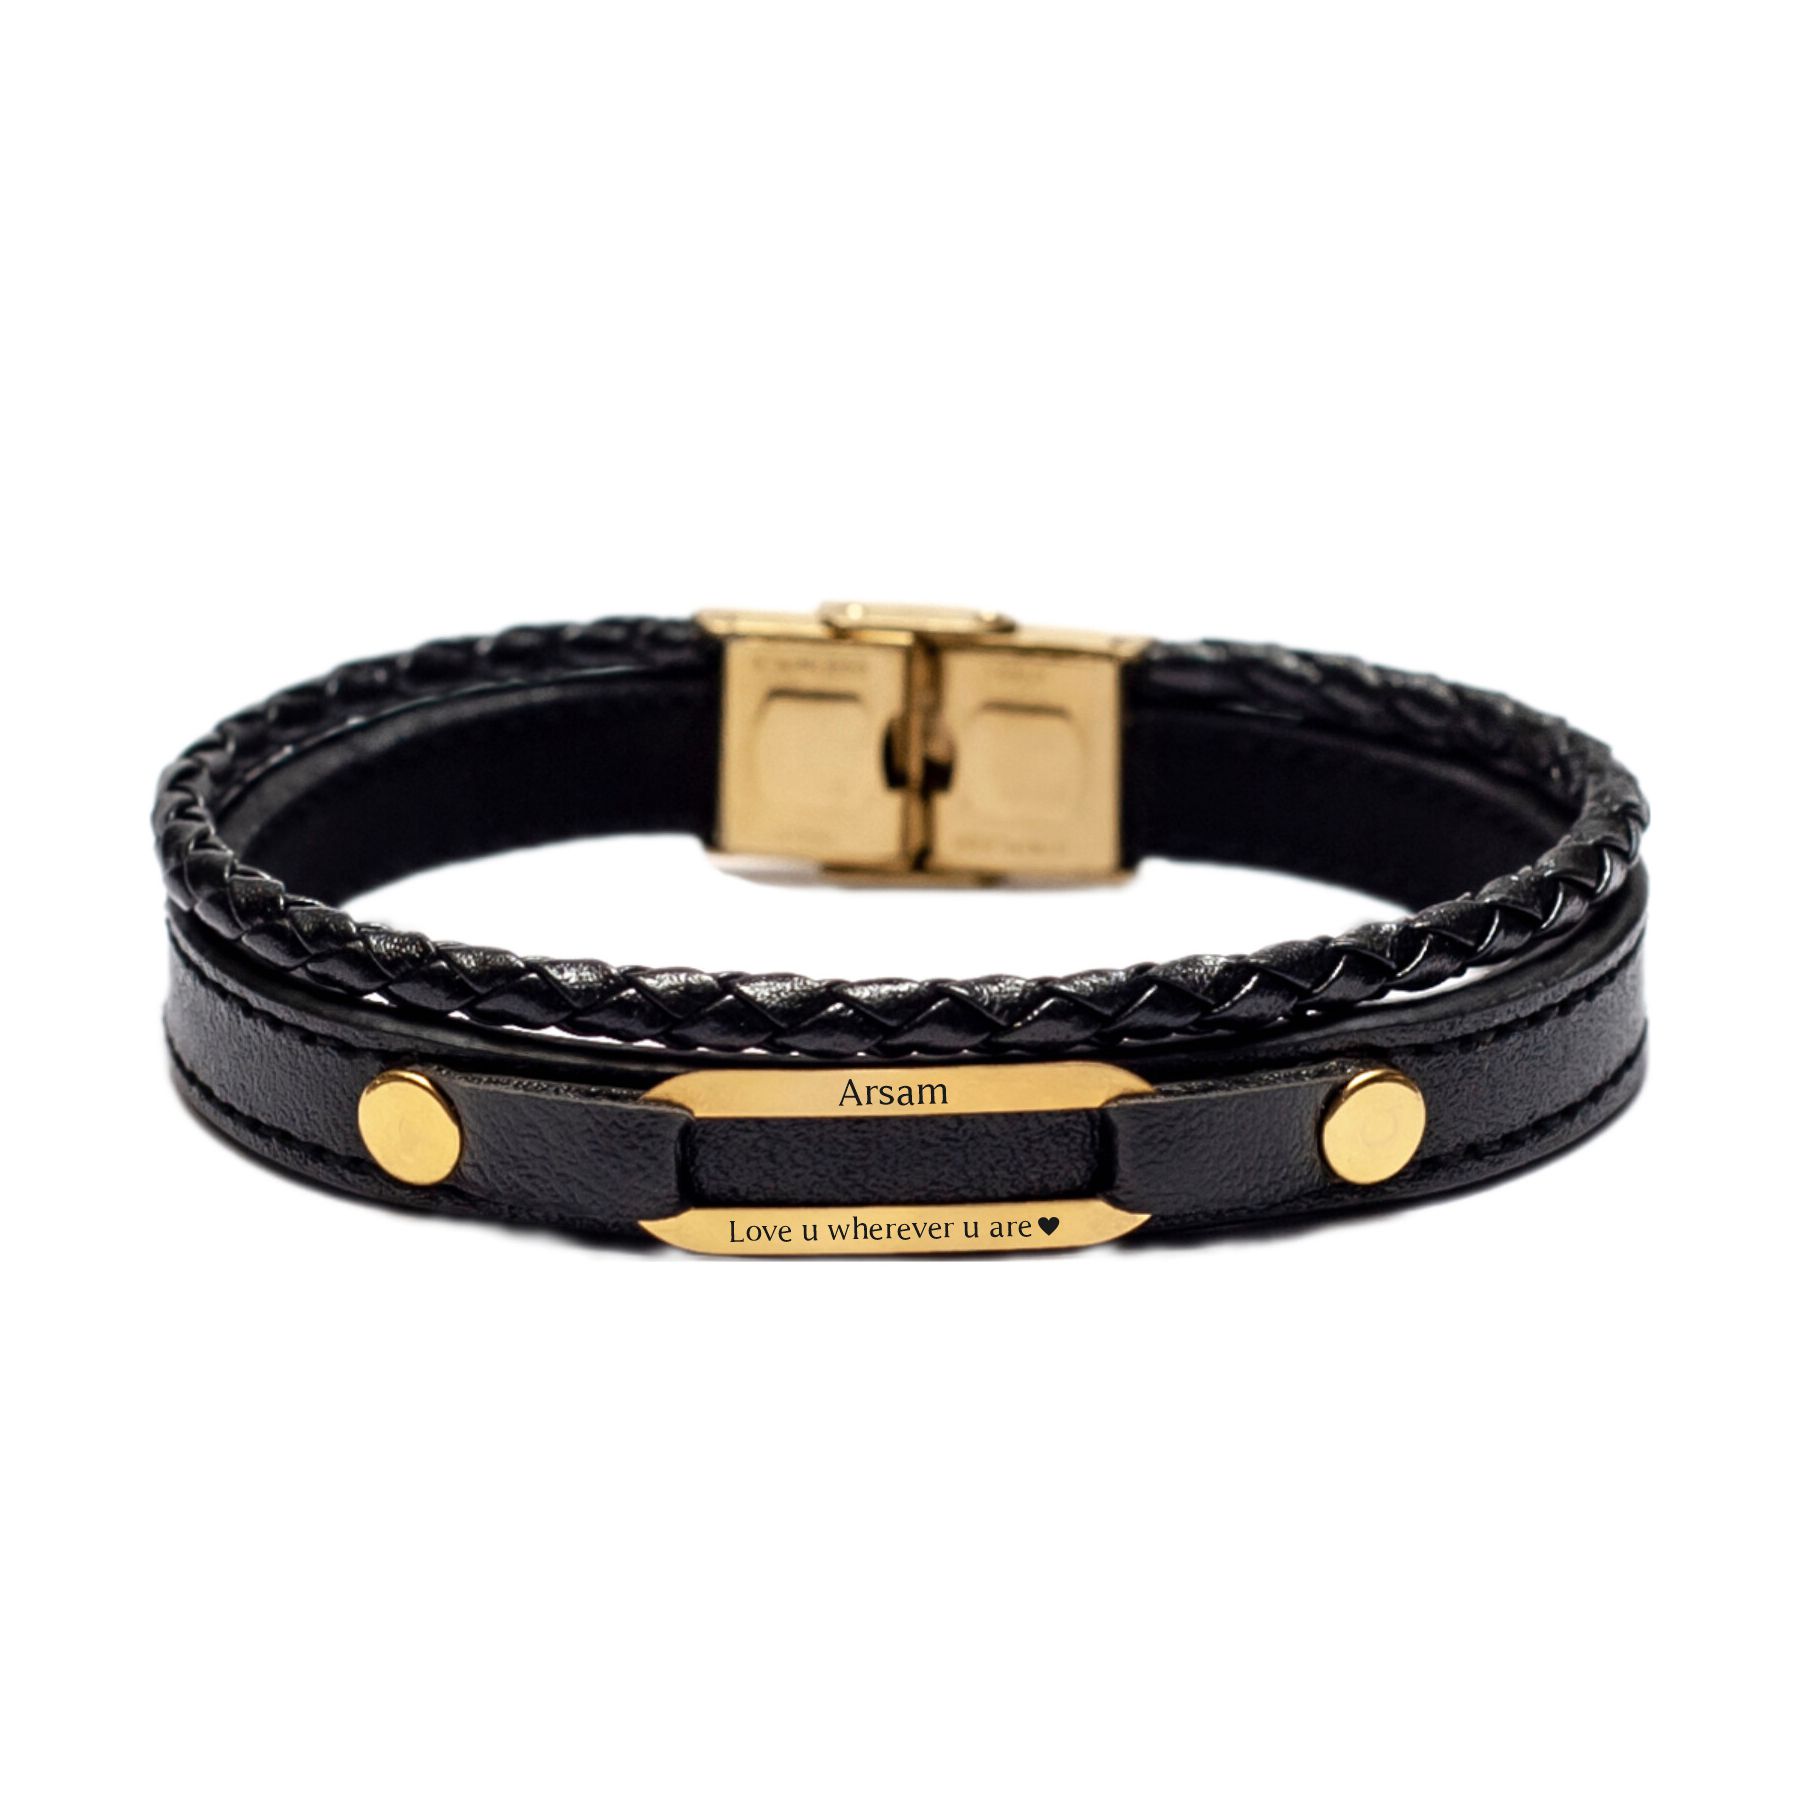 دستبند طلا 18 عیار مردانه لیردا مدل اسم ارسام